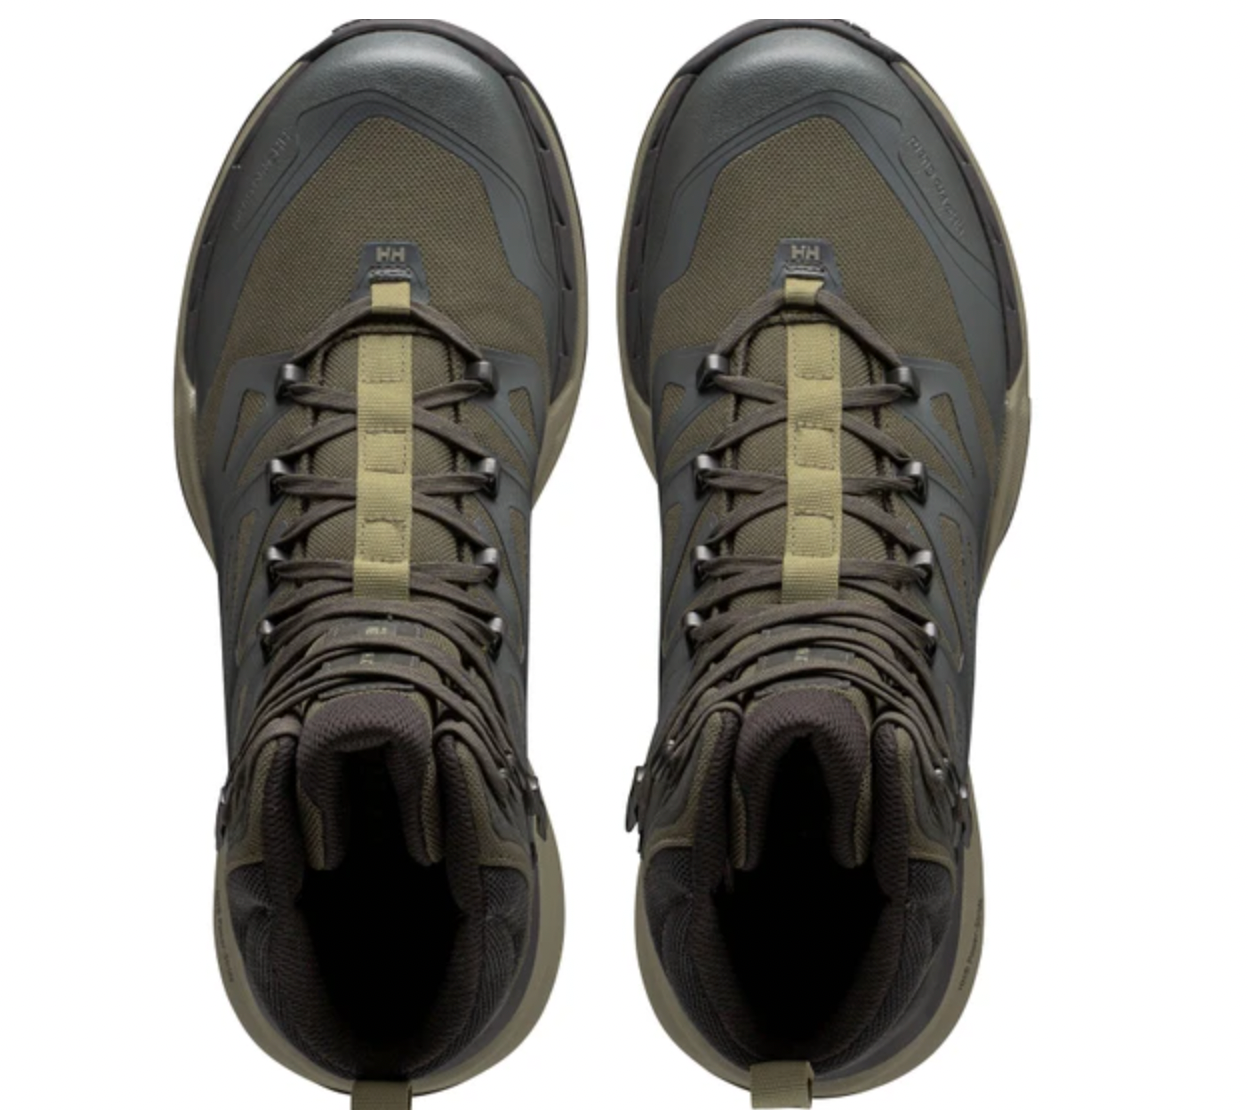 HELLY HANSEN Men's Traverse Hiking/Walking  Boots SPECIAL OFFER